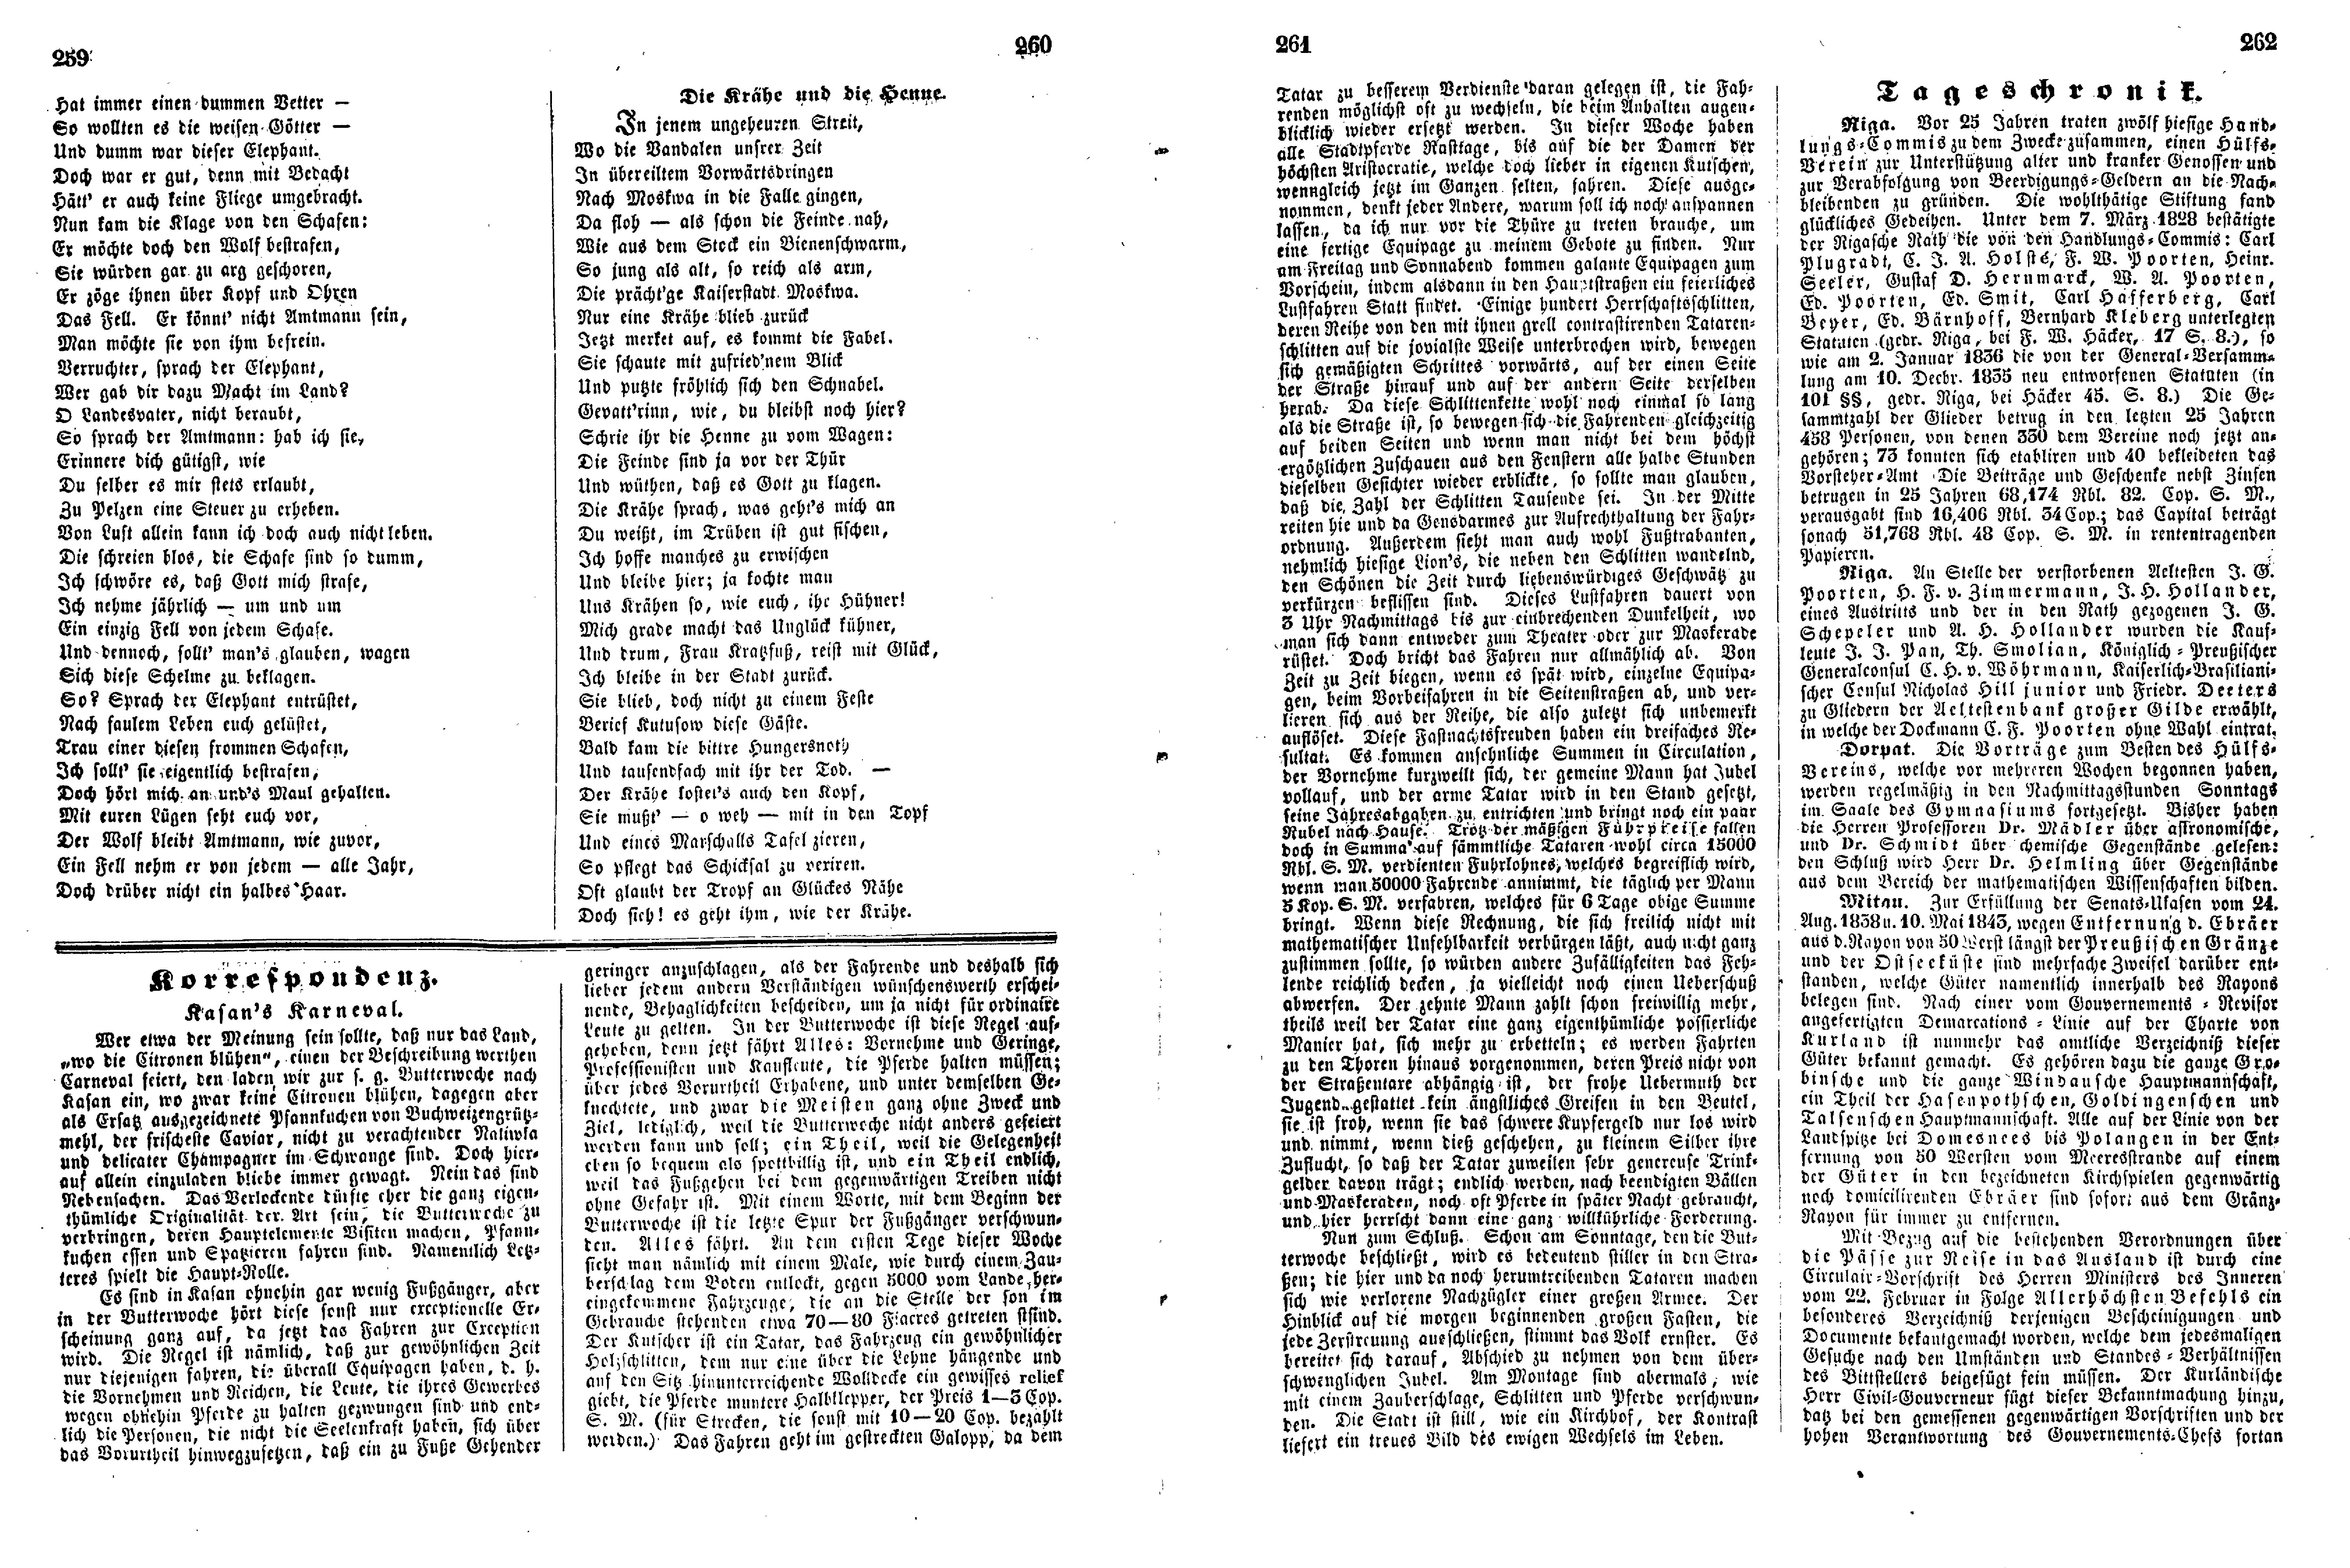 Das Inland [18] (1853) | 75. (259-262) Main body of text